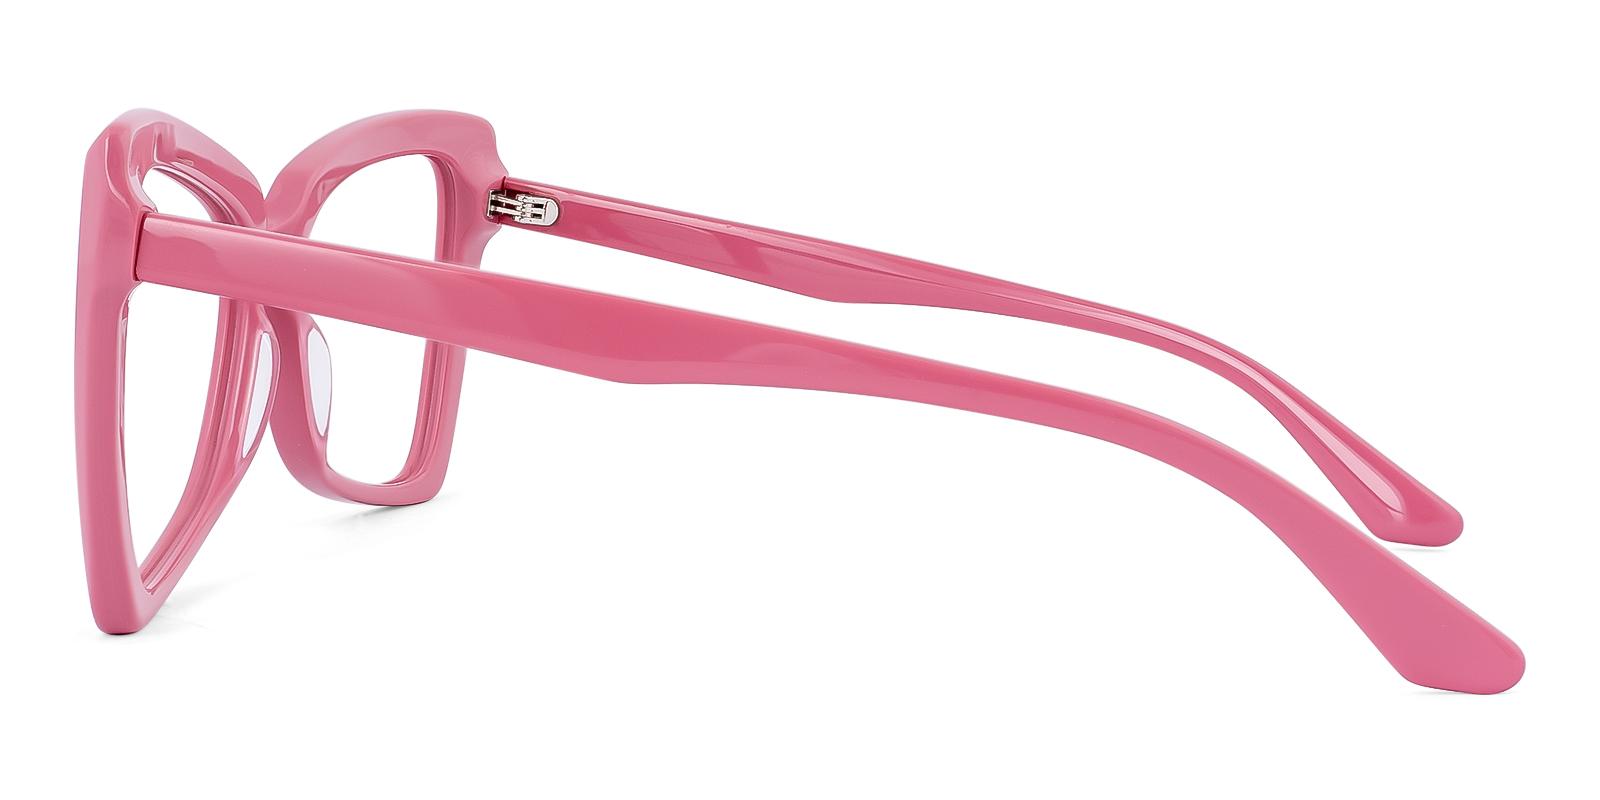 Mesilike Pink Acetate Eyeglasses , UniversalBridgeFit Frames from ABBE Glasses